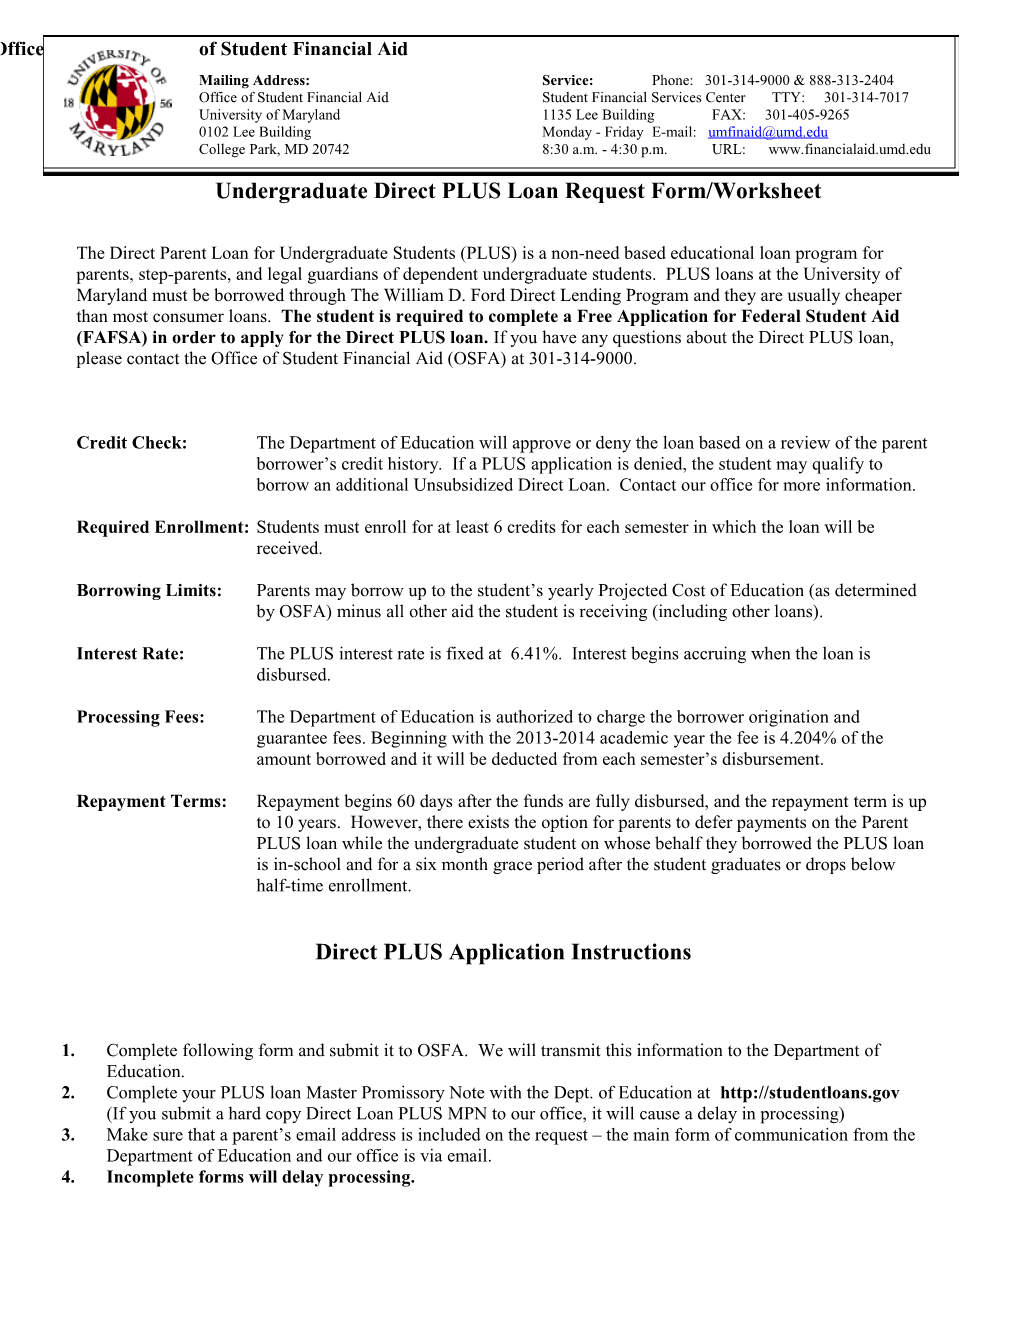 Undergraduate Direct PLUS Loan Request Form/Worksheet